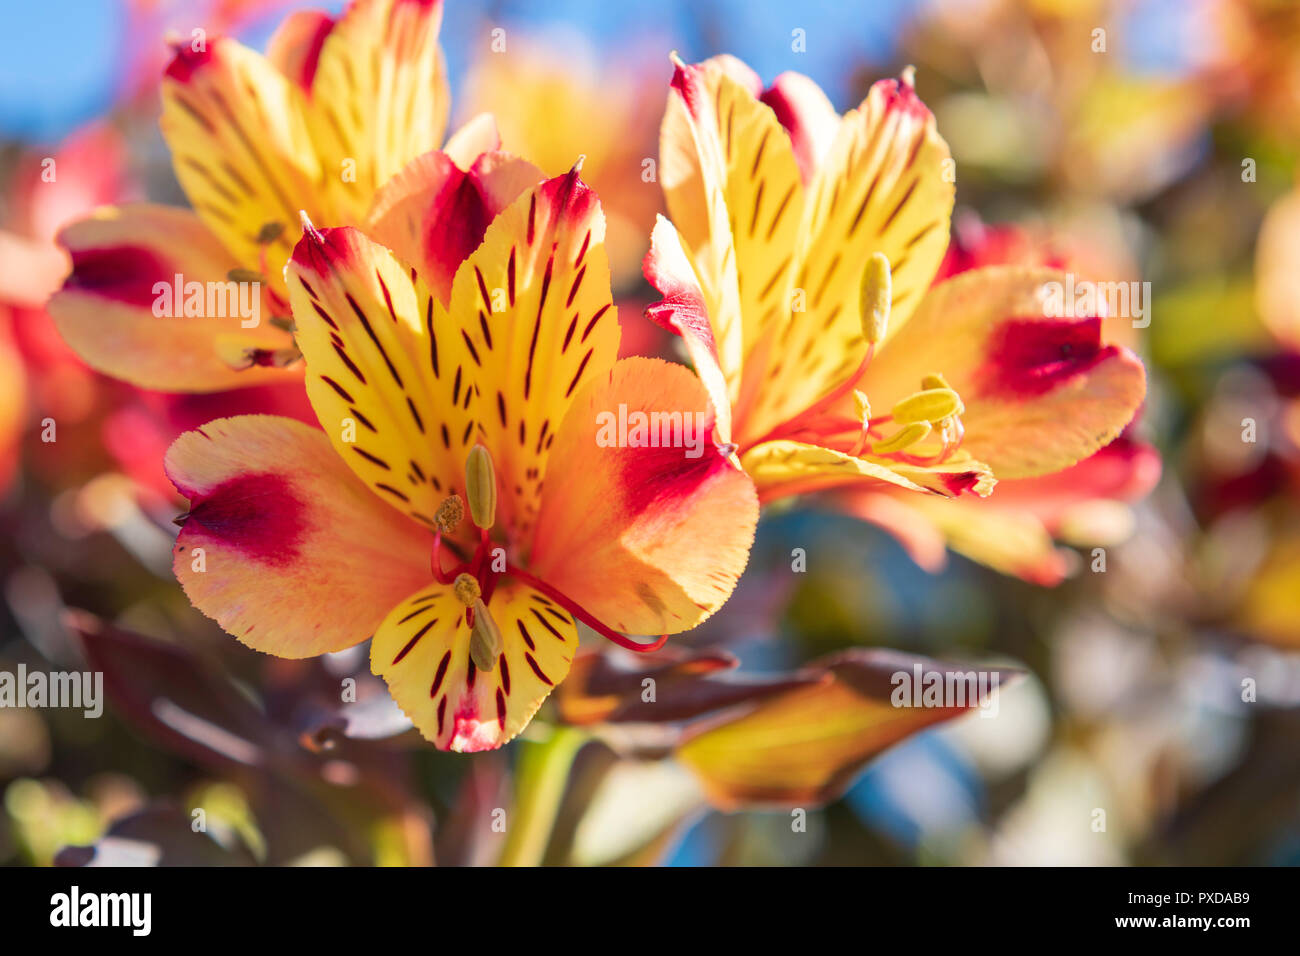 Alstromeria 'Indian summer' colourful flowers, UK. Stock Photo